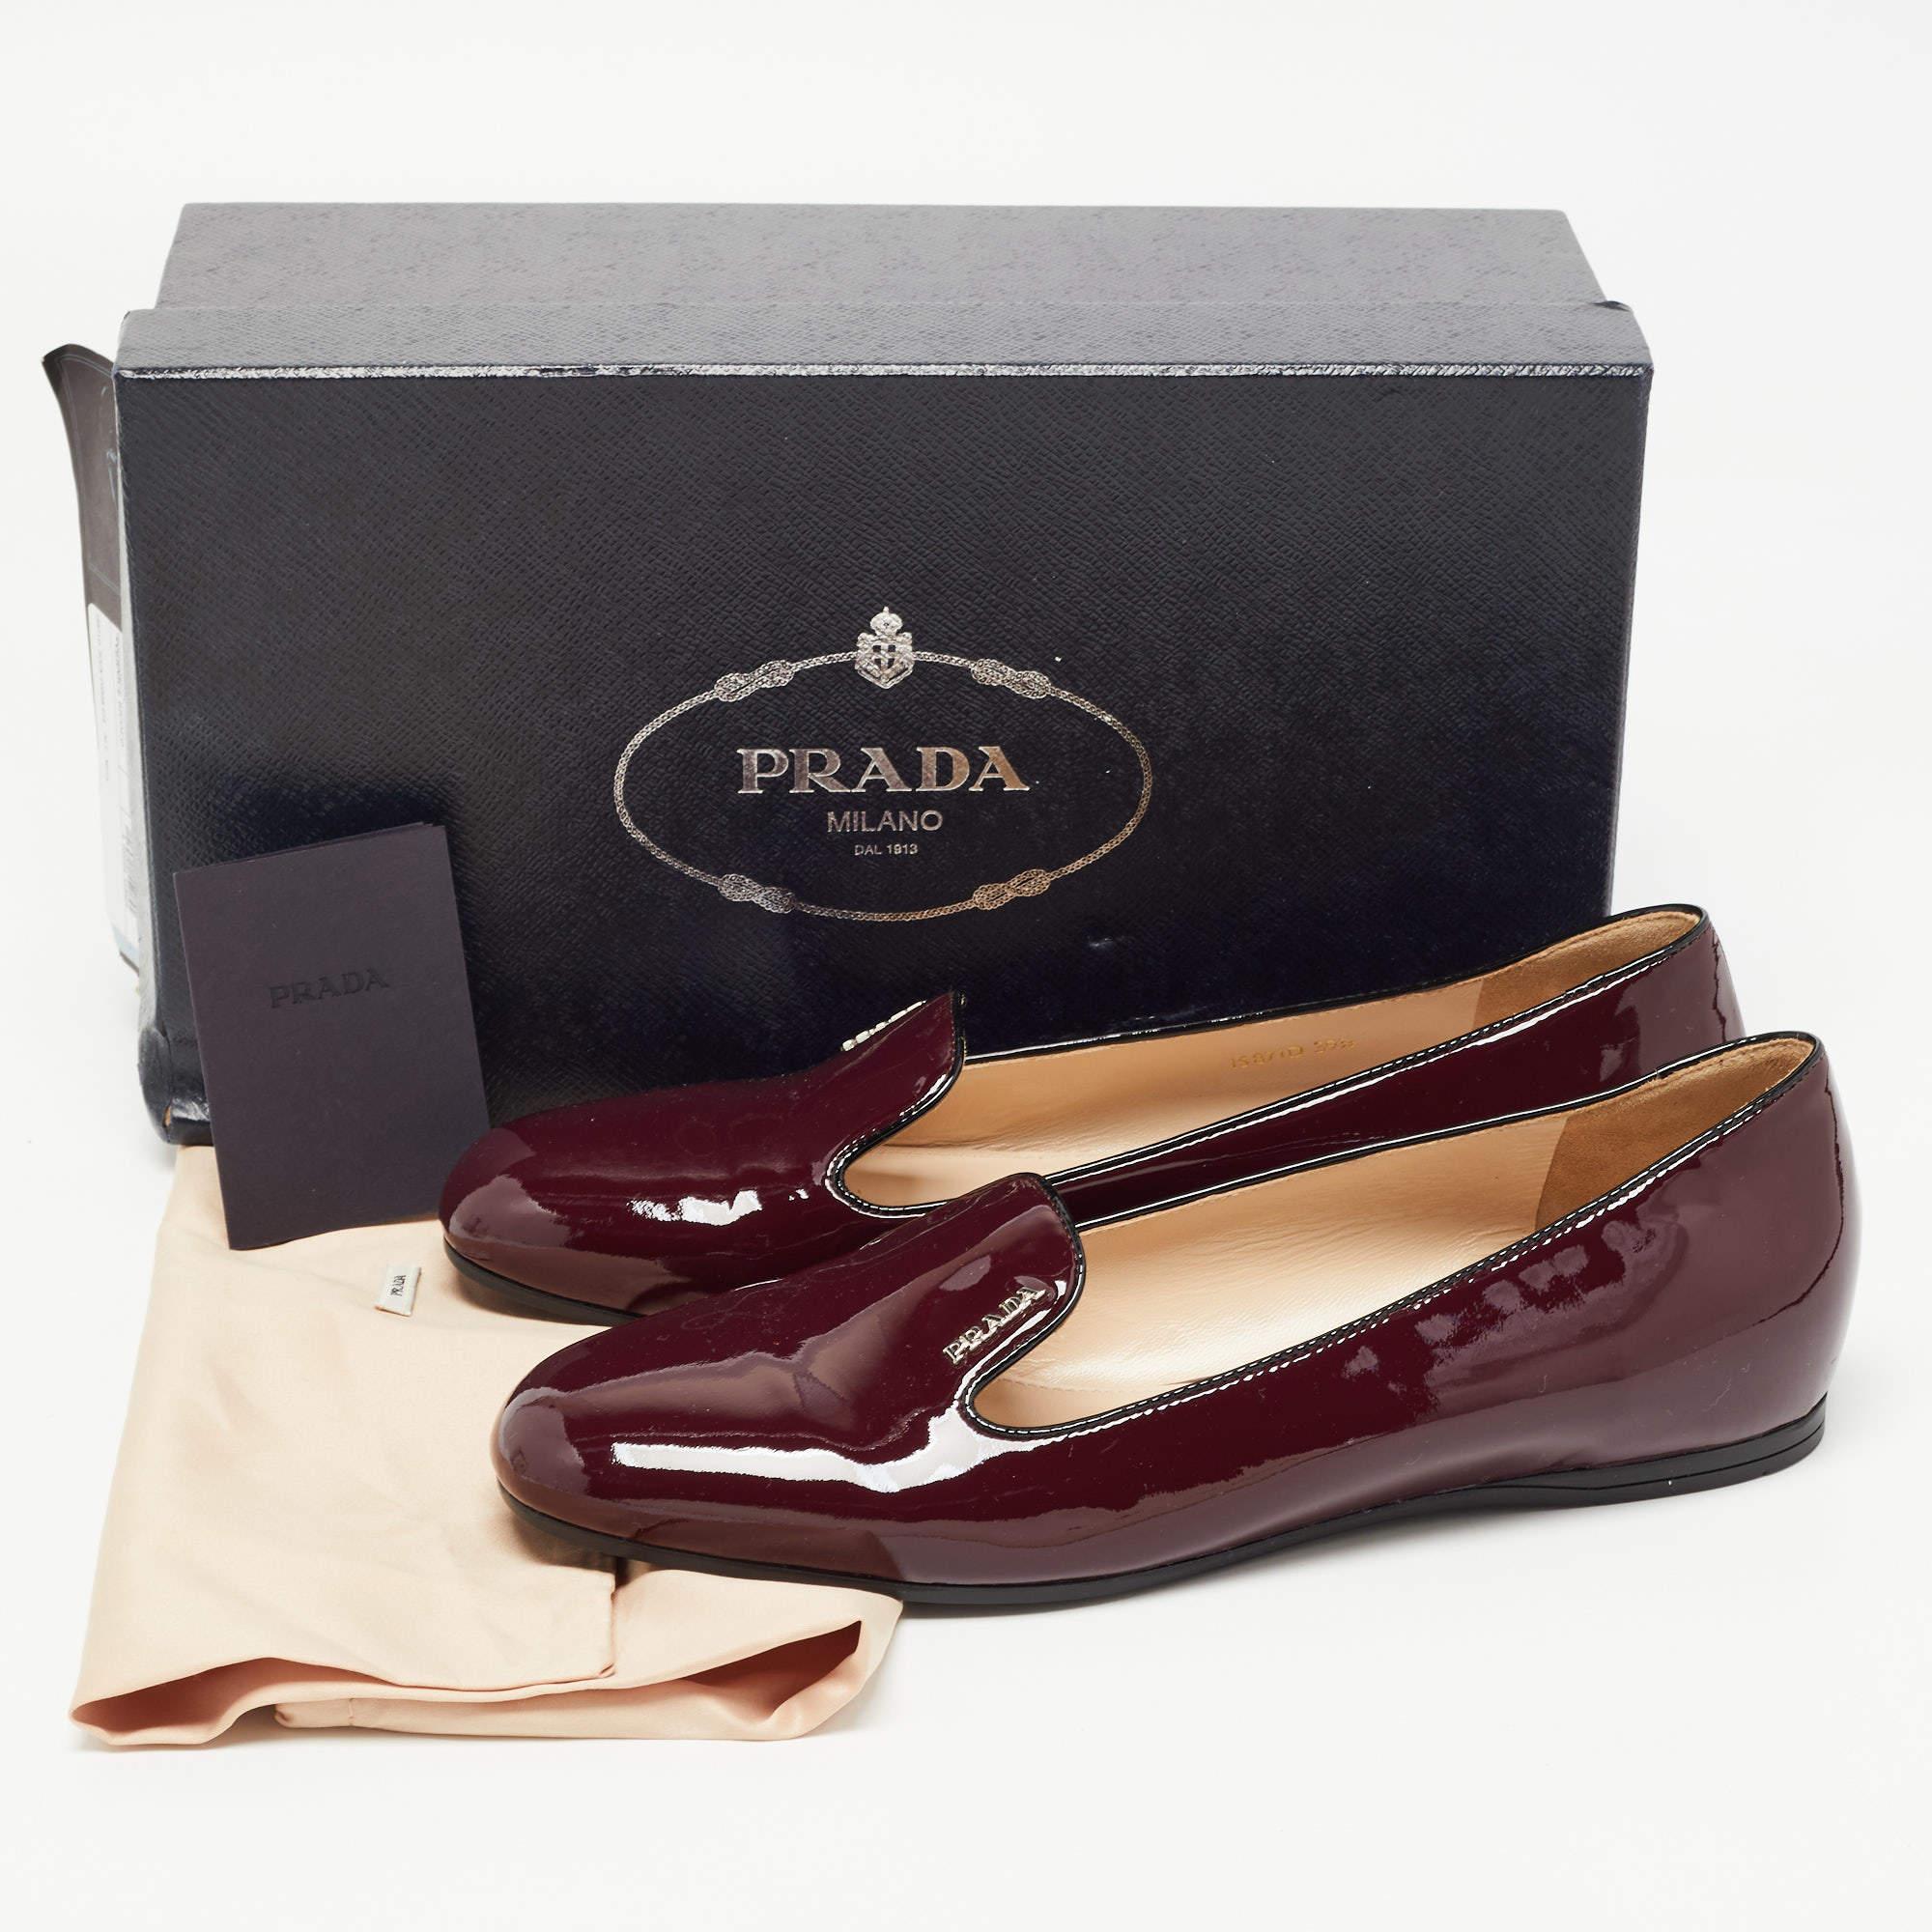 Prada Burgundy Patent Leather Smoking Slippers Size 39.5 5